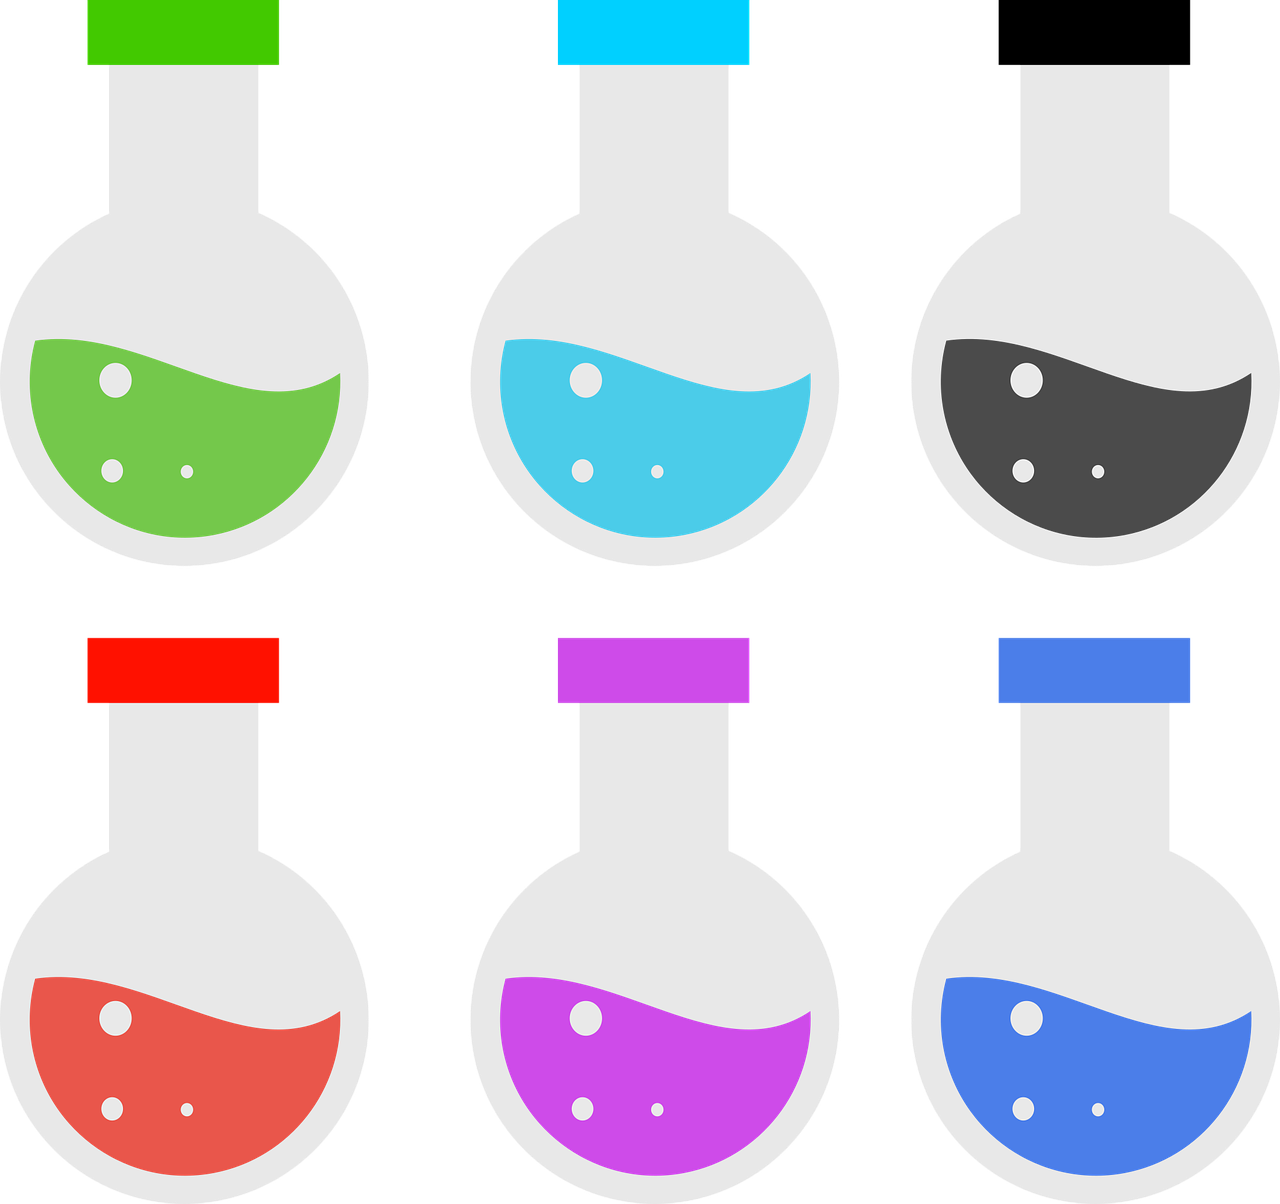 Colored potion bottles